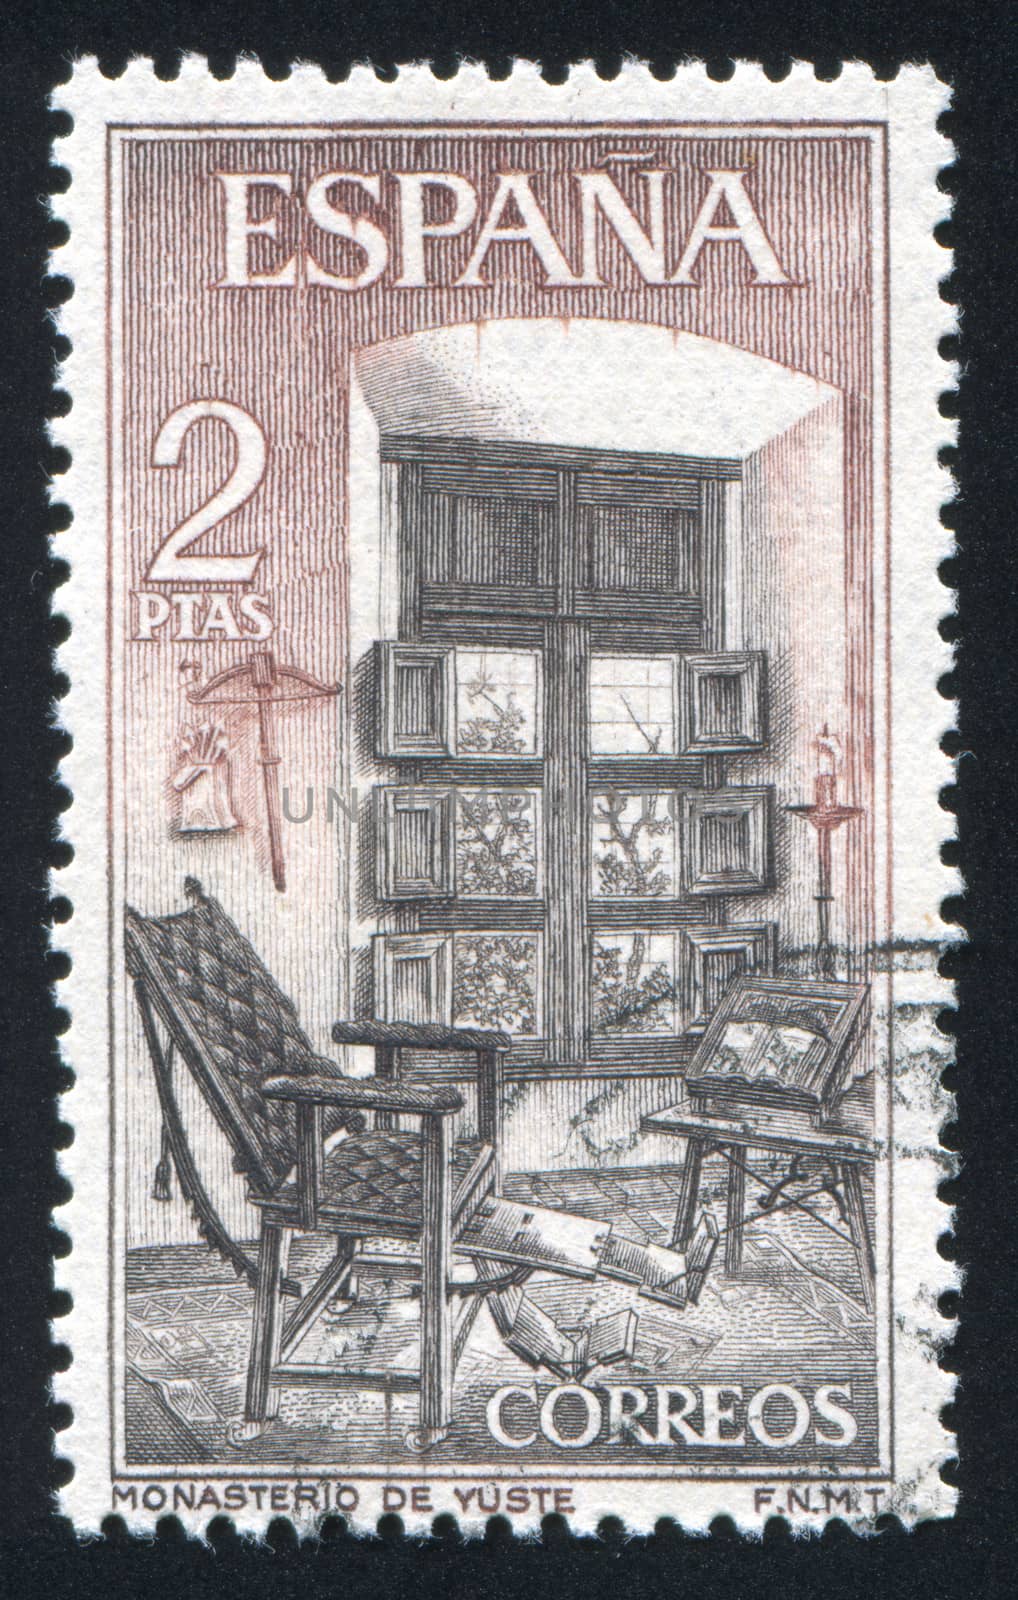 SPAIN - CIRCA 1965: stamp printed by Spain, shows Chamber of Charles V, Yuste Monastery, circa 1965